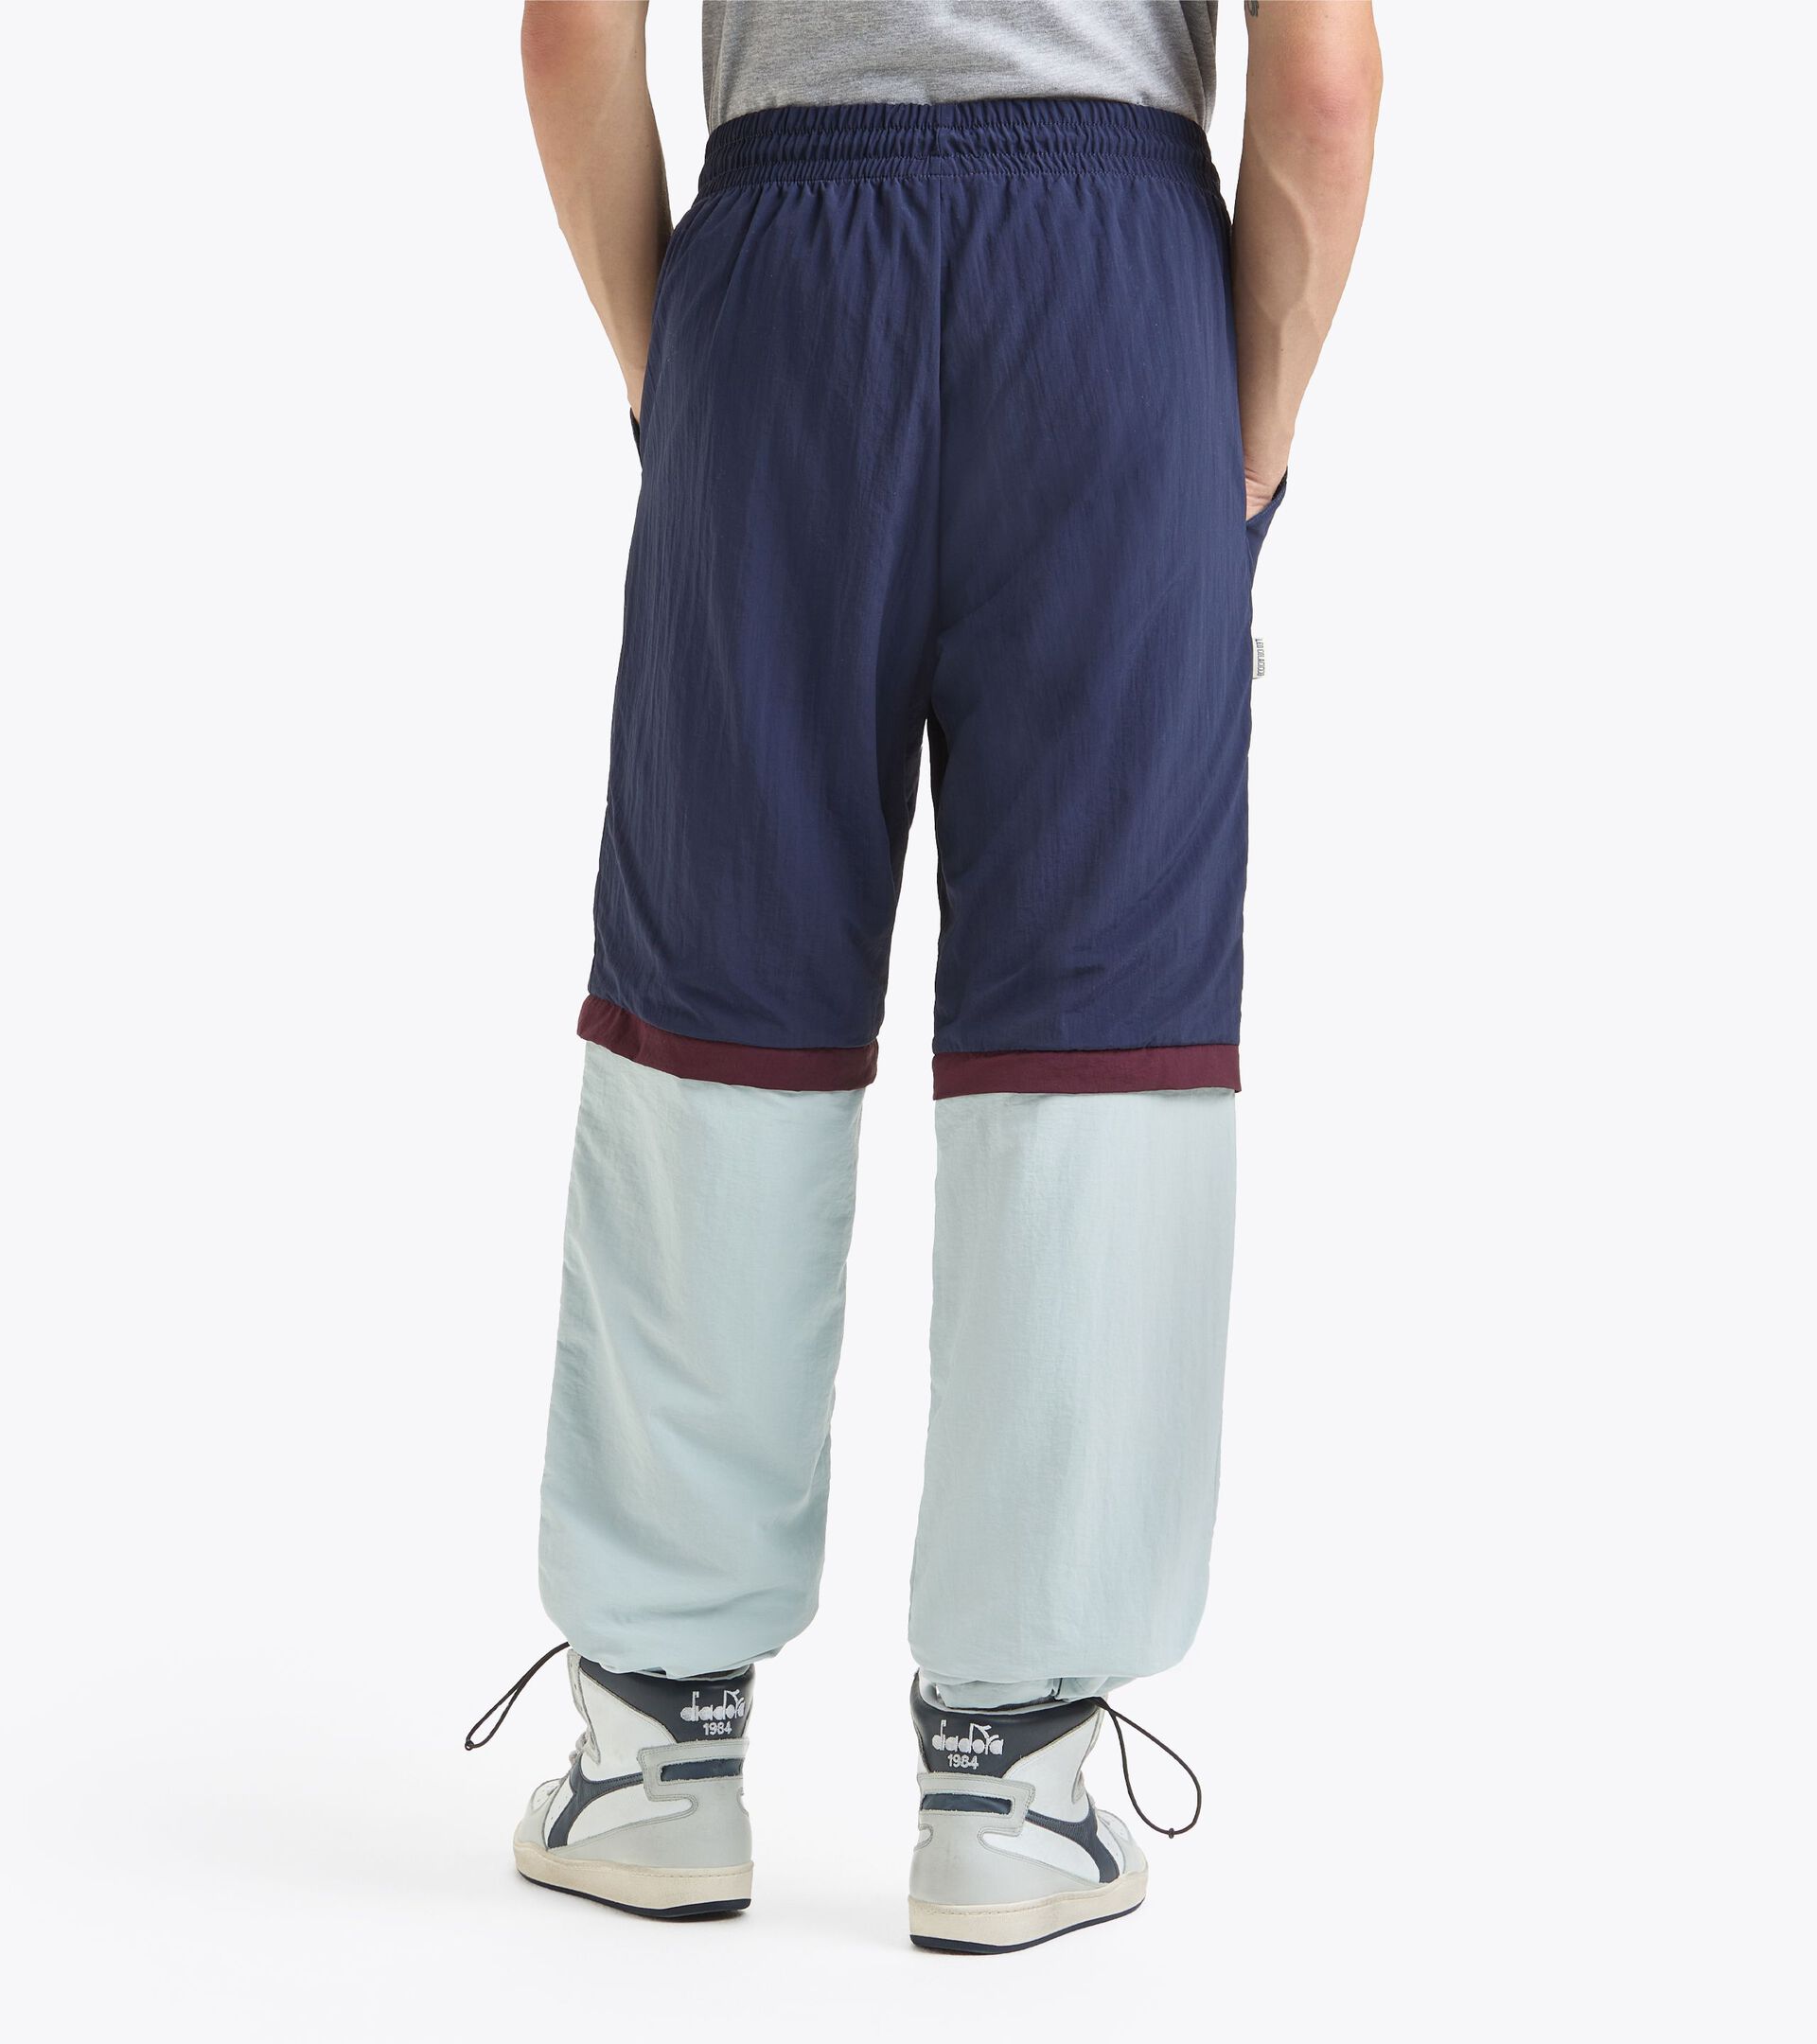 Pantaloni modulari - Made in Italy - Gender Neutral TRACK PANT LEGACY BL OCEANA/GR GRATTACIELO/RSSO - Diadora